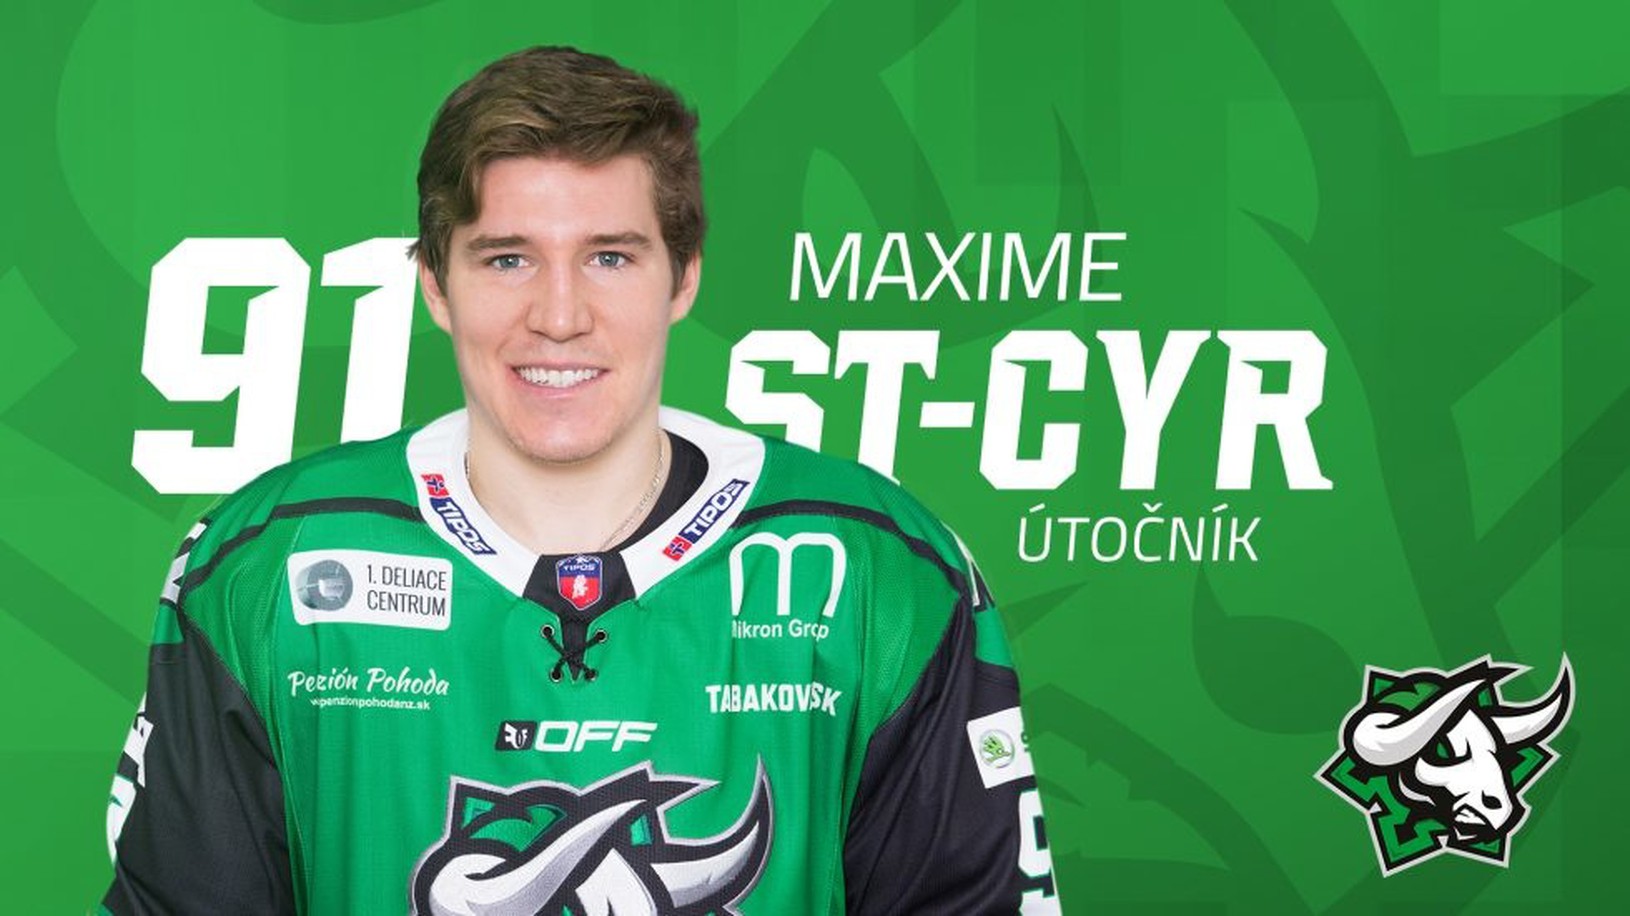 Maxime St-Cyr